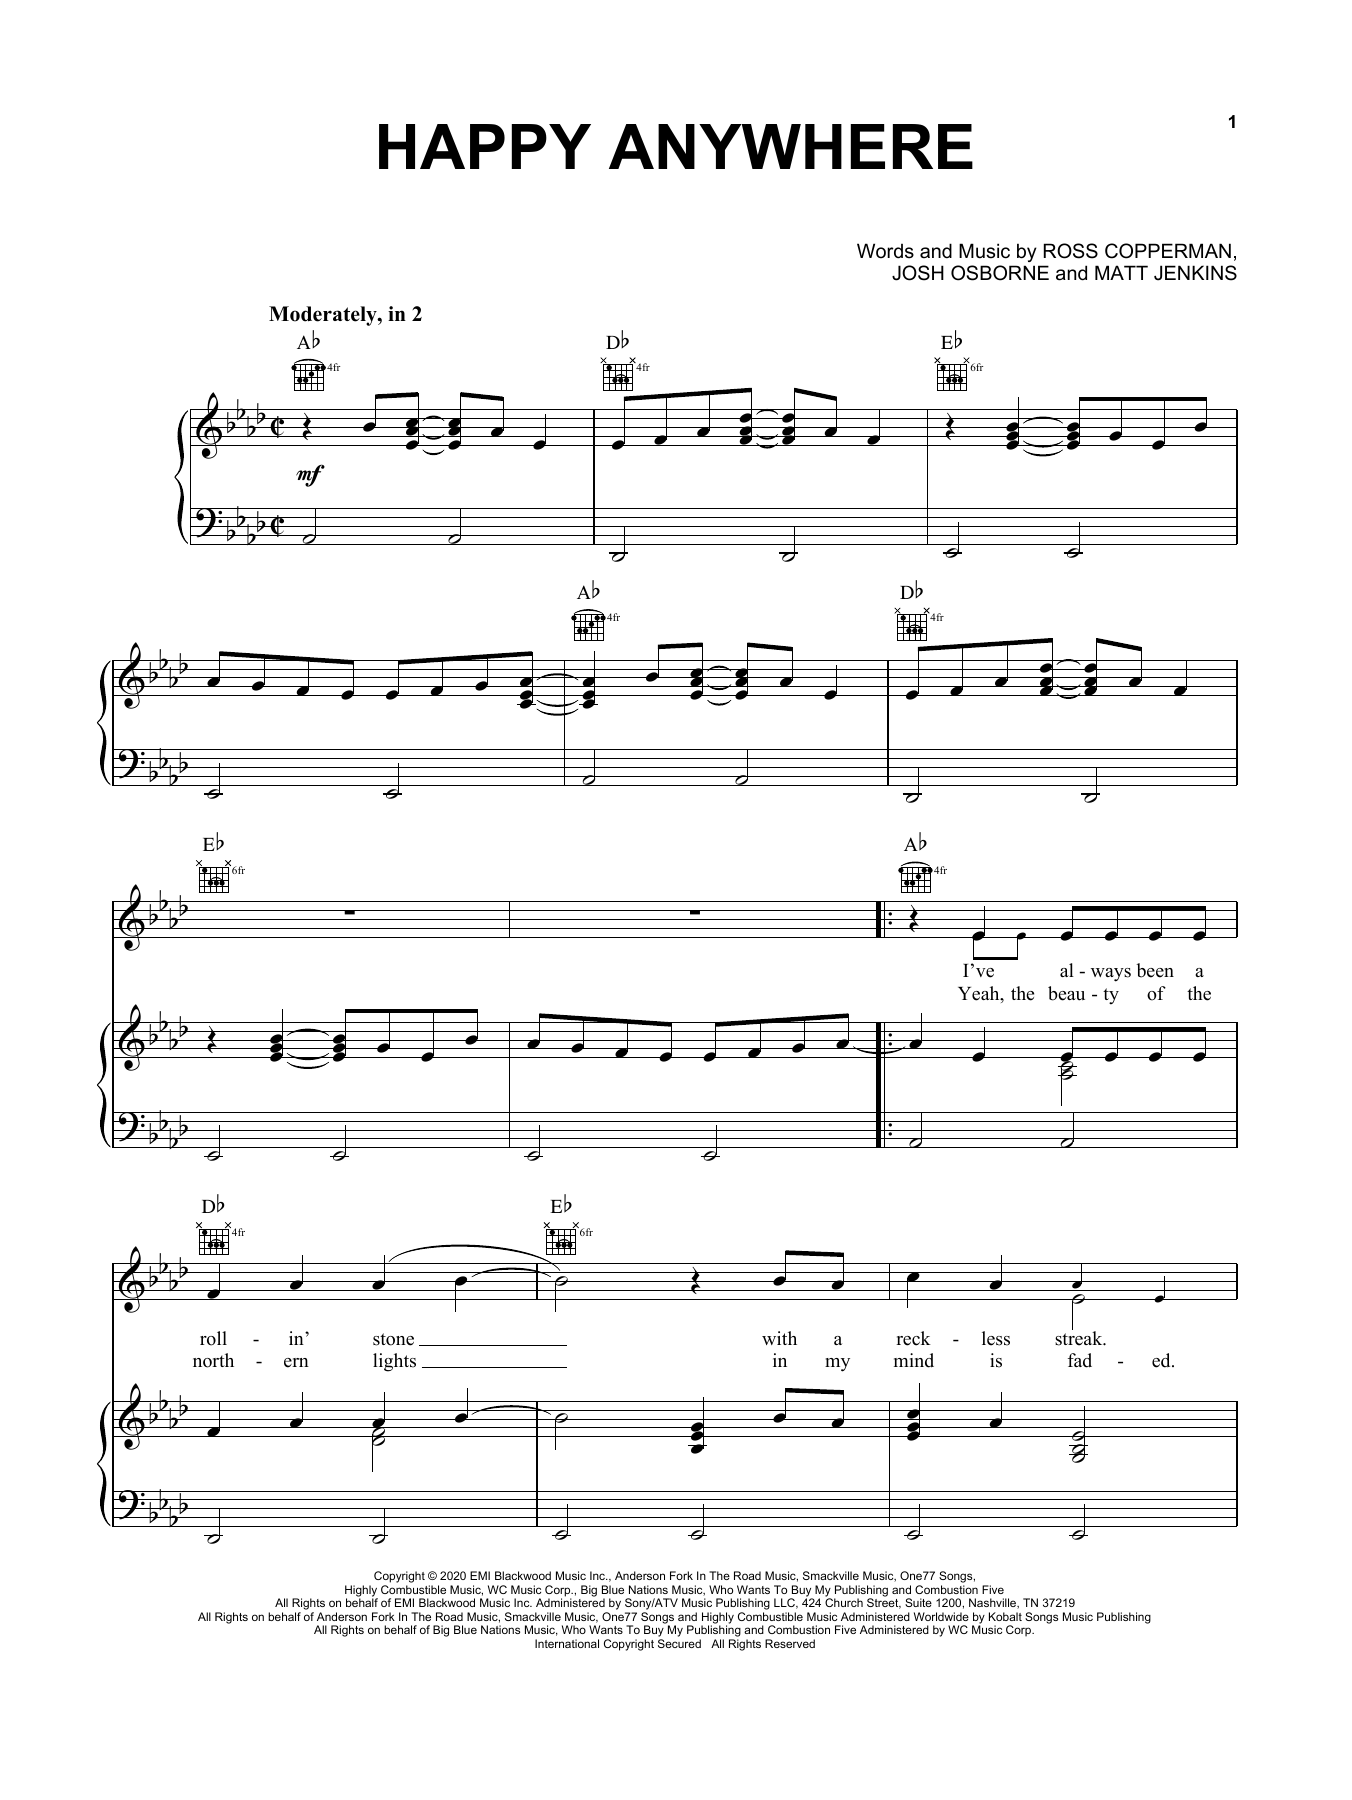 Blake Shelton Happy Anywhere (feat. Gwen Stefani) Sheet Music Notes & Chords for Easy Guitar Tab - Download or Print PDF